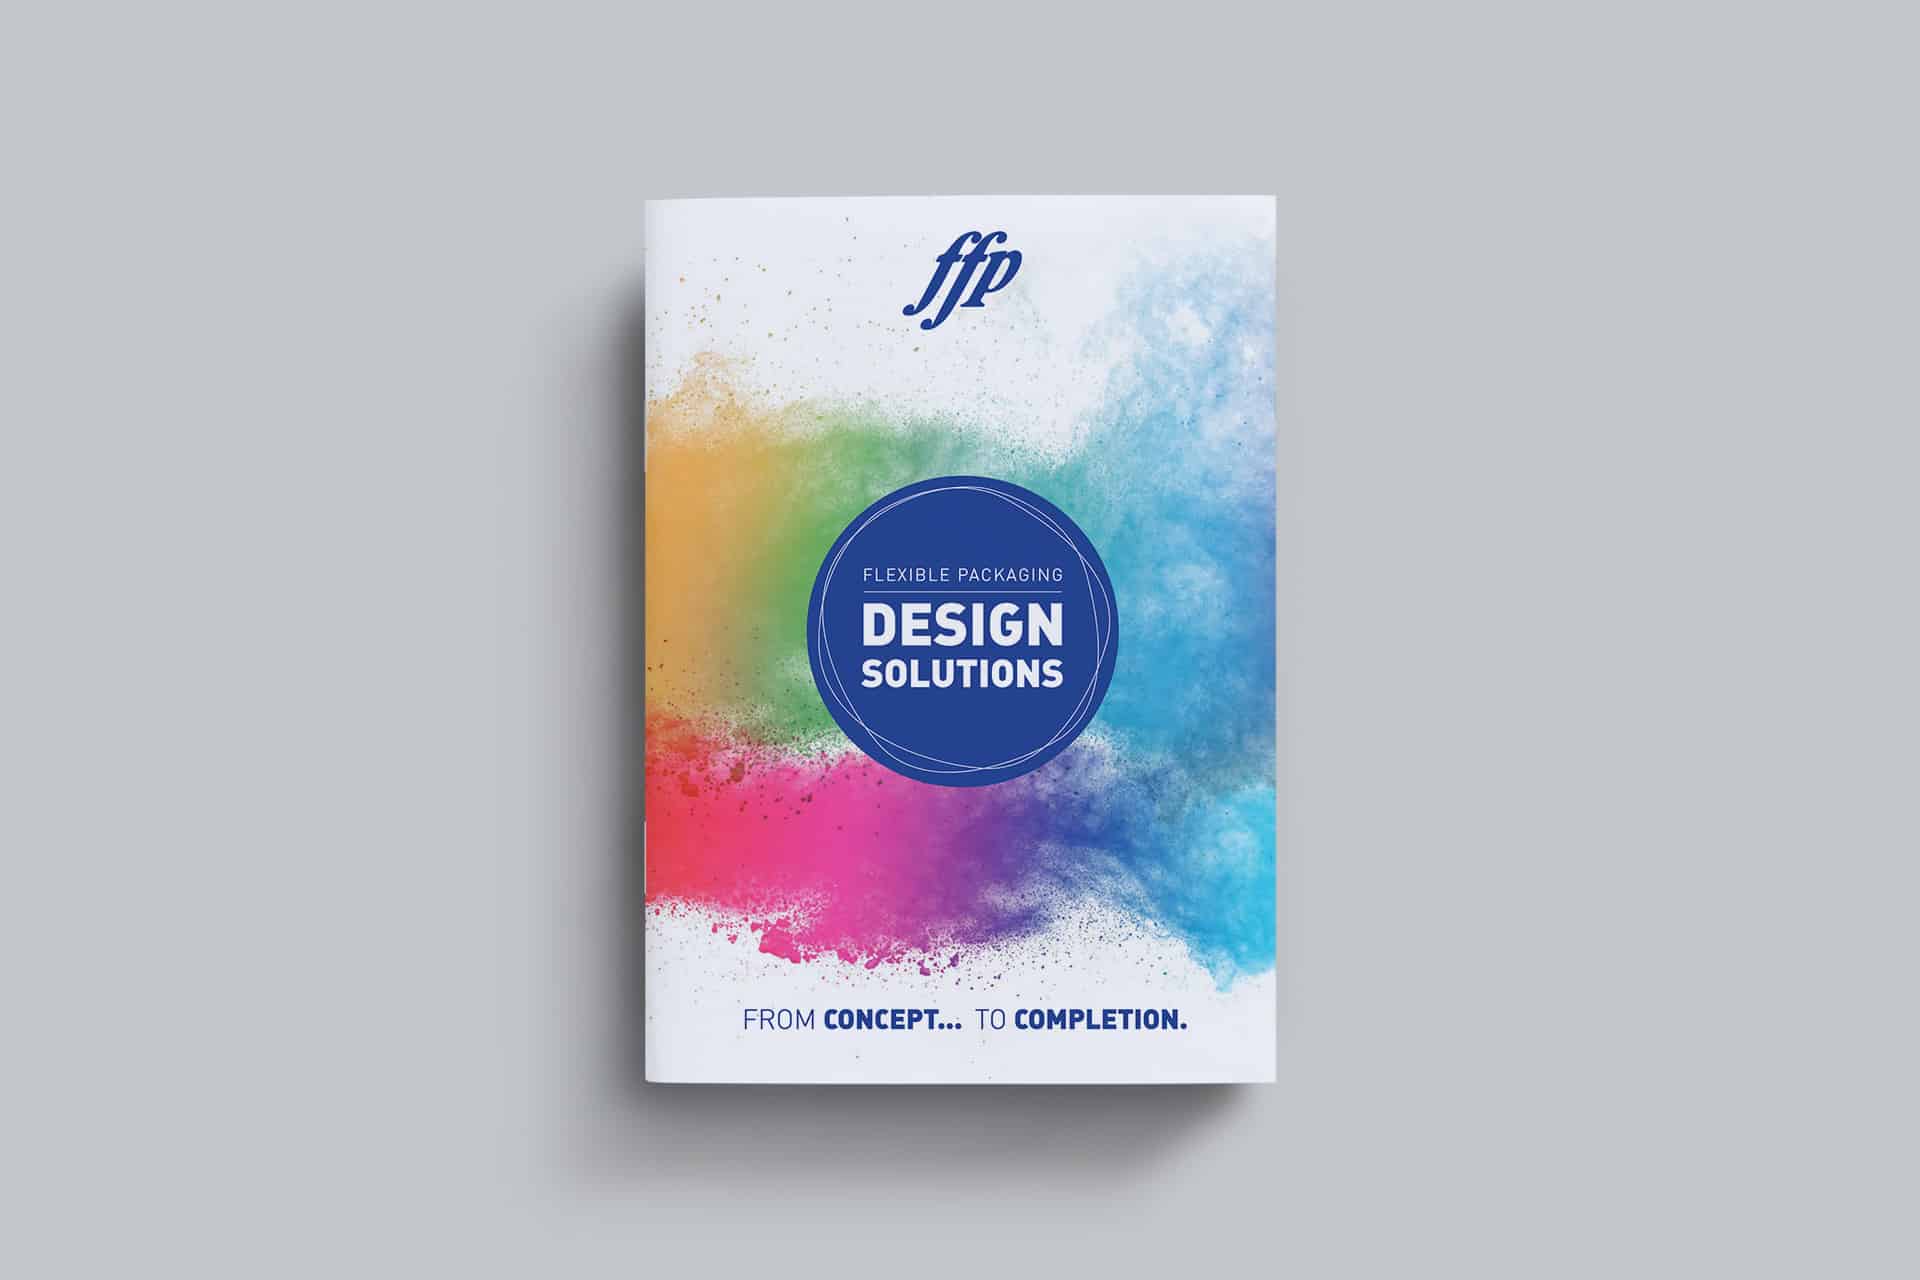 FFP Design Solutions Digital